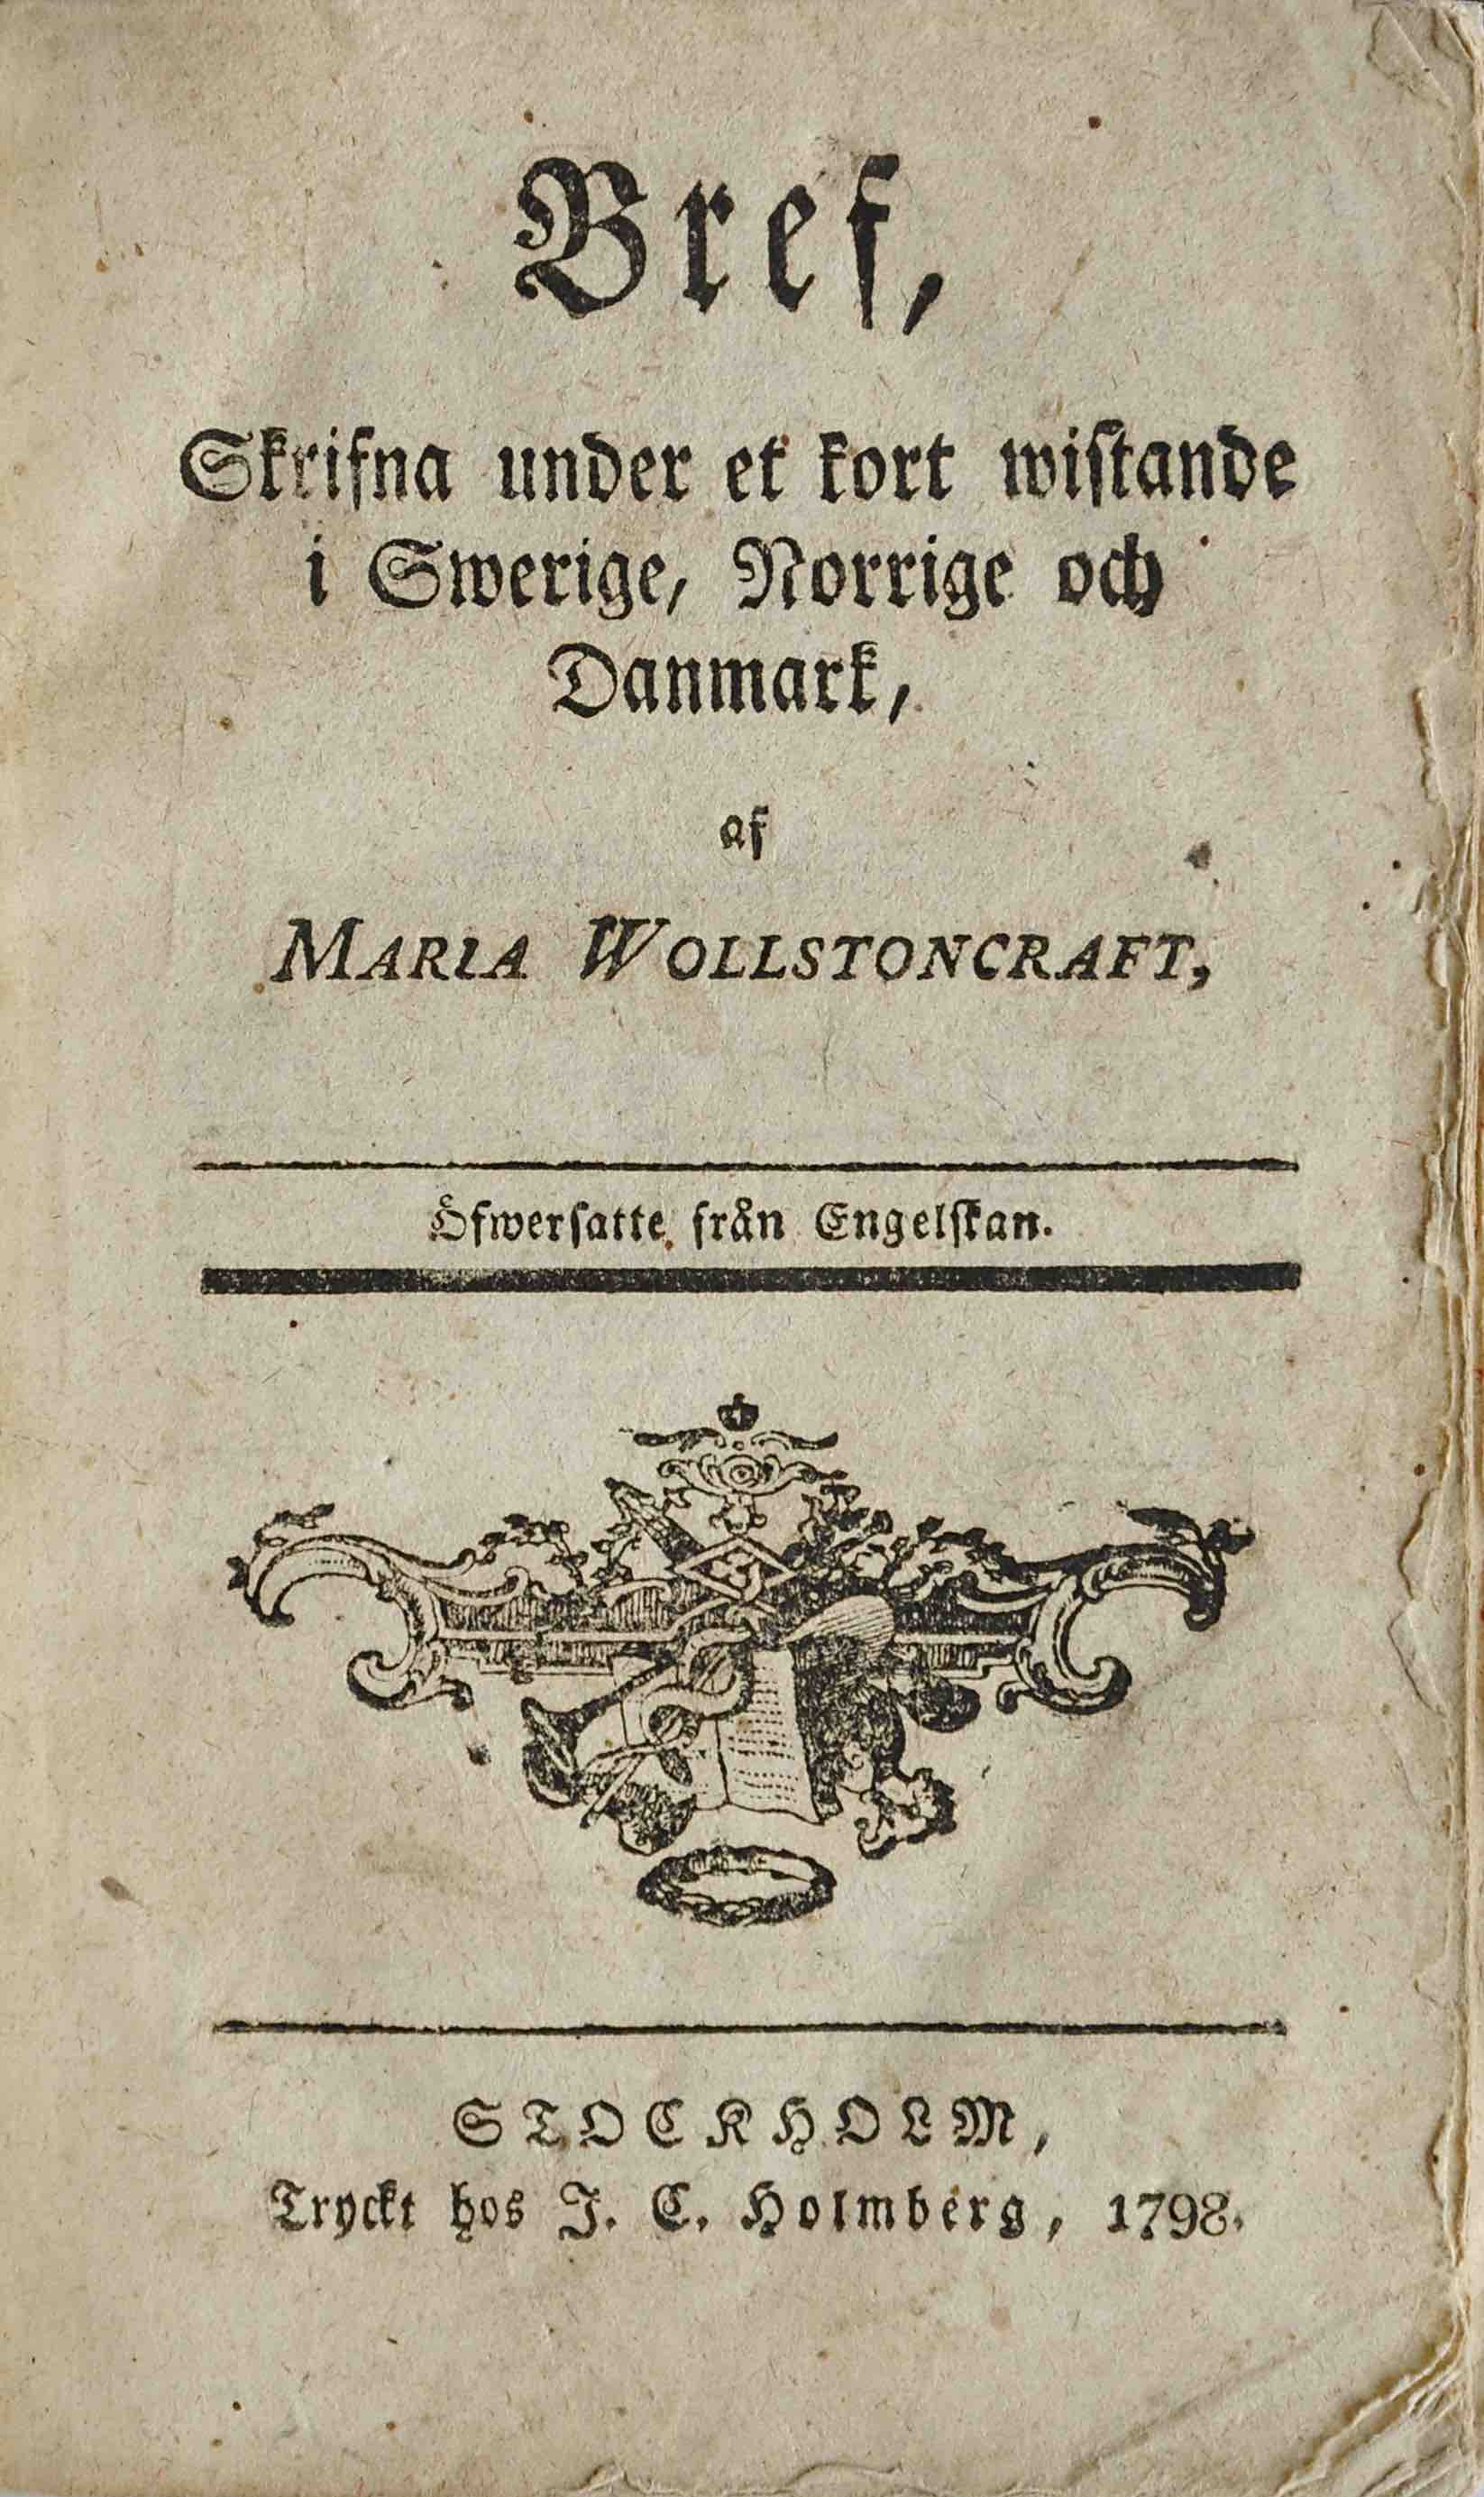 WOLLSTONECRAFT, MARY: - Bref, skrifna under et kort wistande i Swerige, Norrige och Danmark. Stockholm, J.C. Holmberg, 1798.